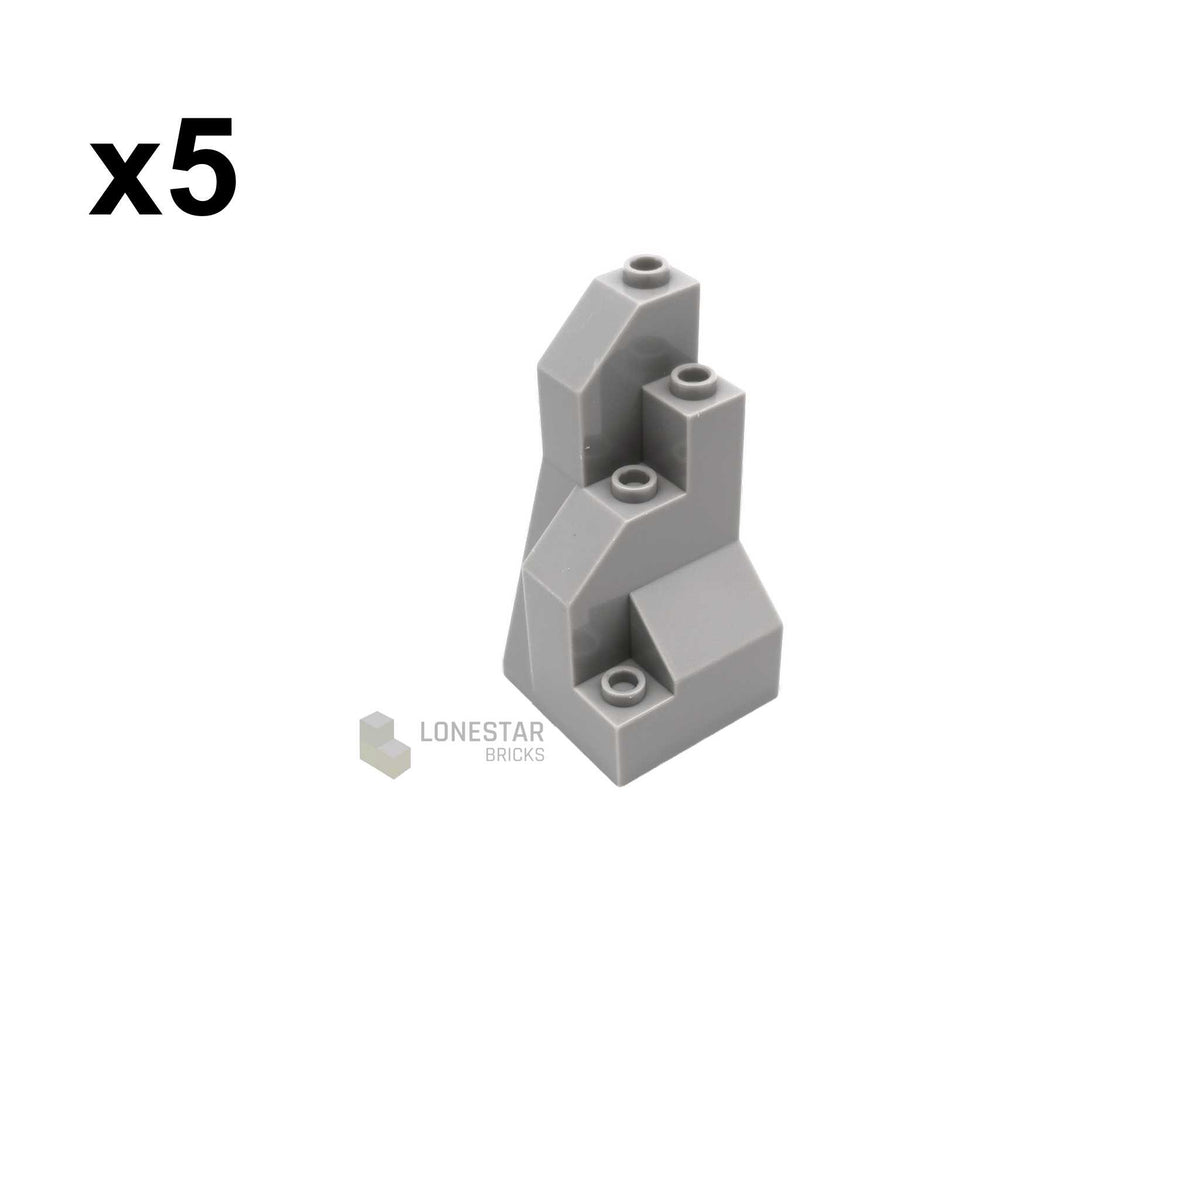 90012 - Felsen hellgrau 3x3x5 5 Stück (Lonestar-Bricks)